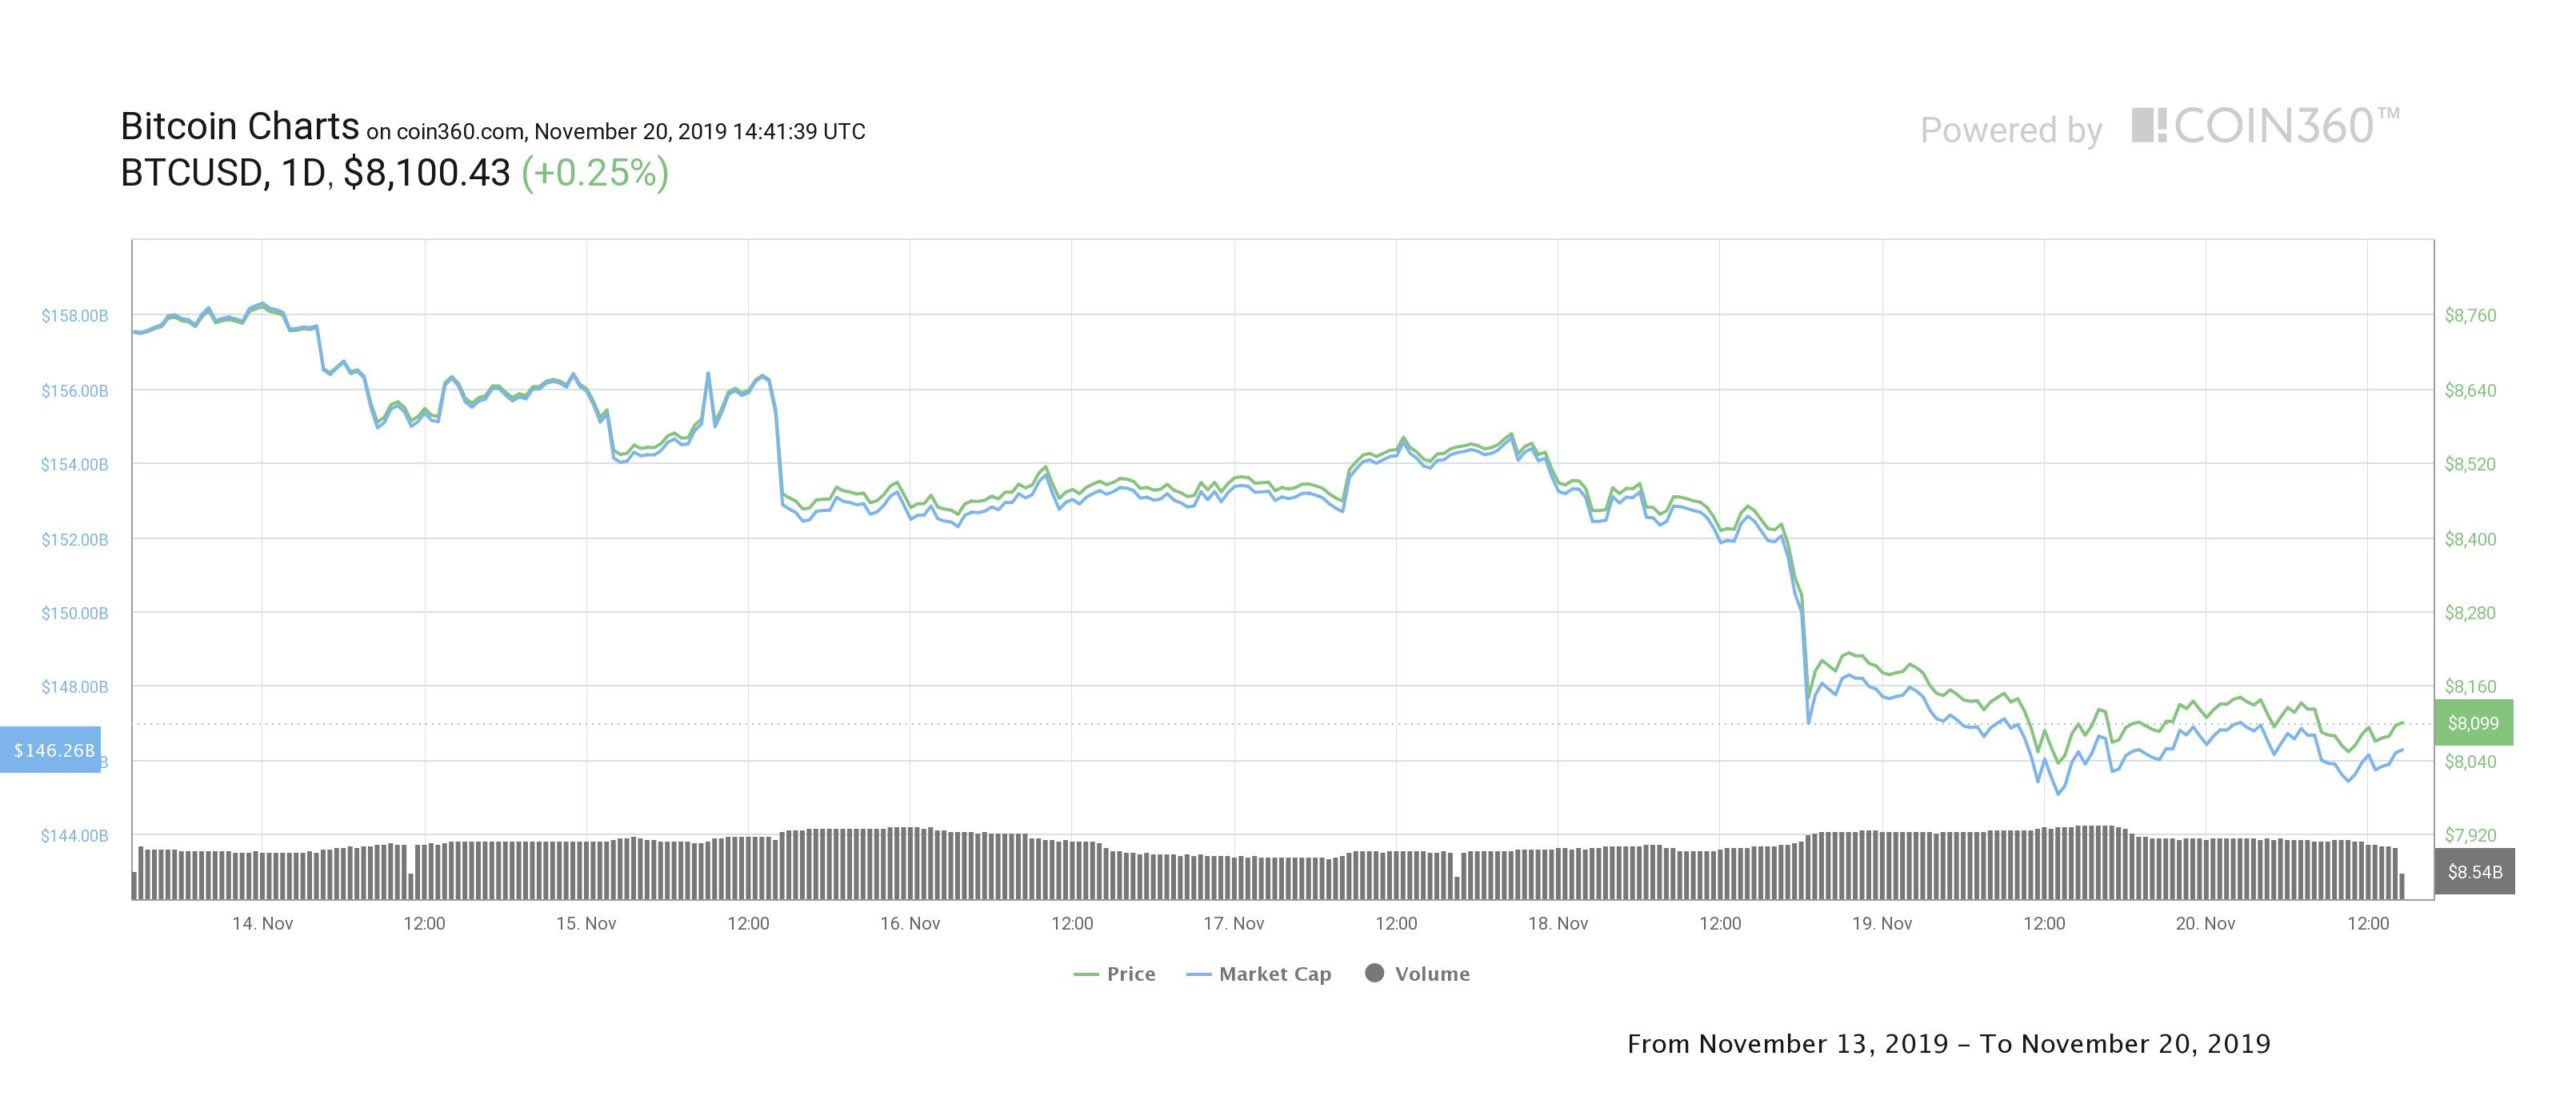 Bitcoin Bulls Still Struggling To Keep Price Above $8,000 As Bearish Volume Remains Feeble